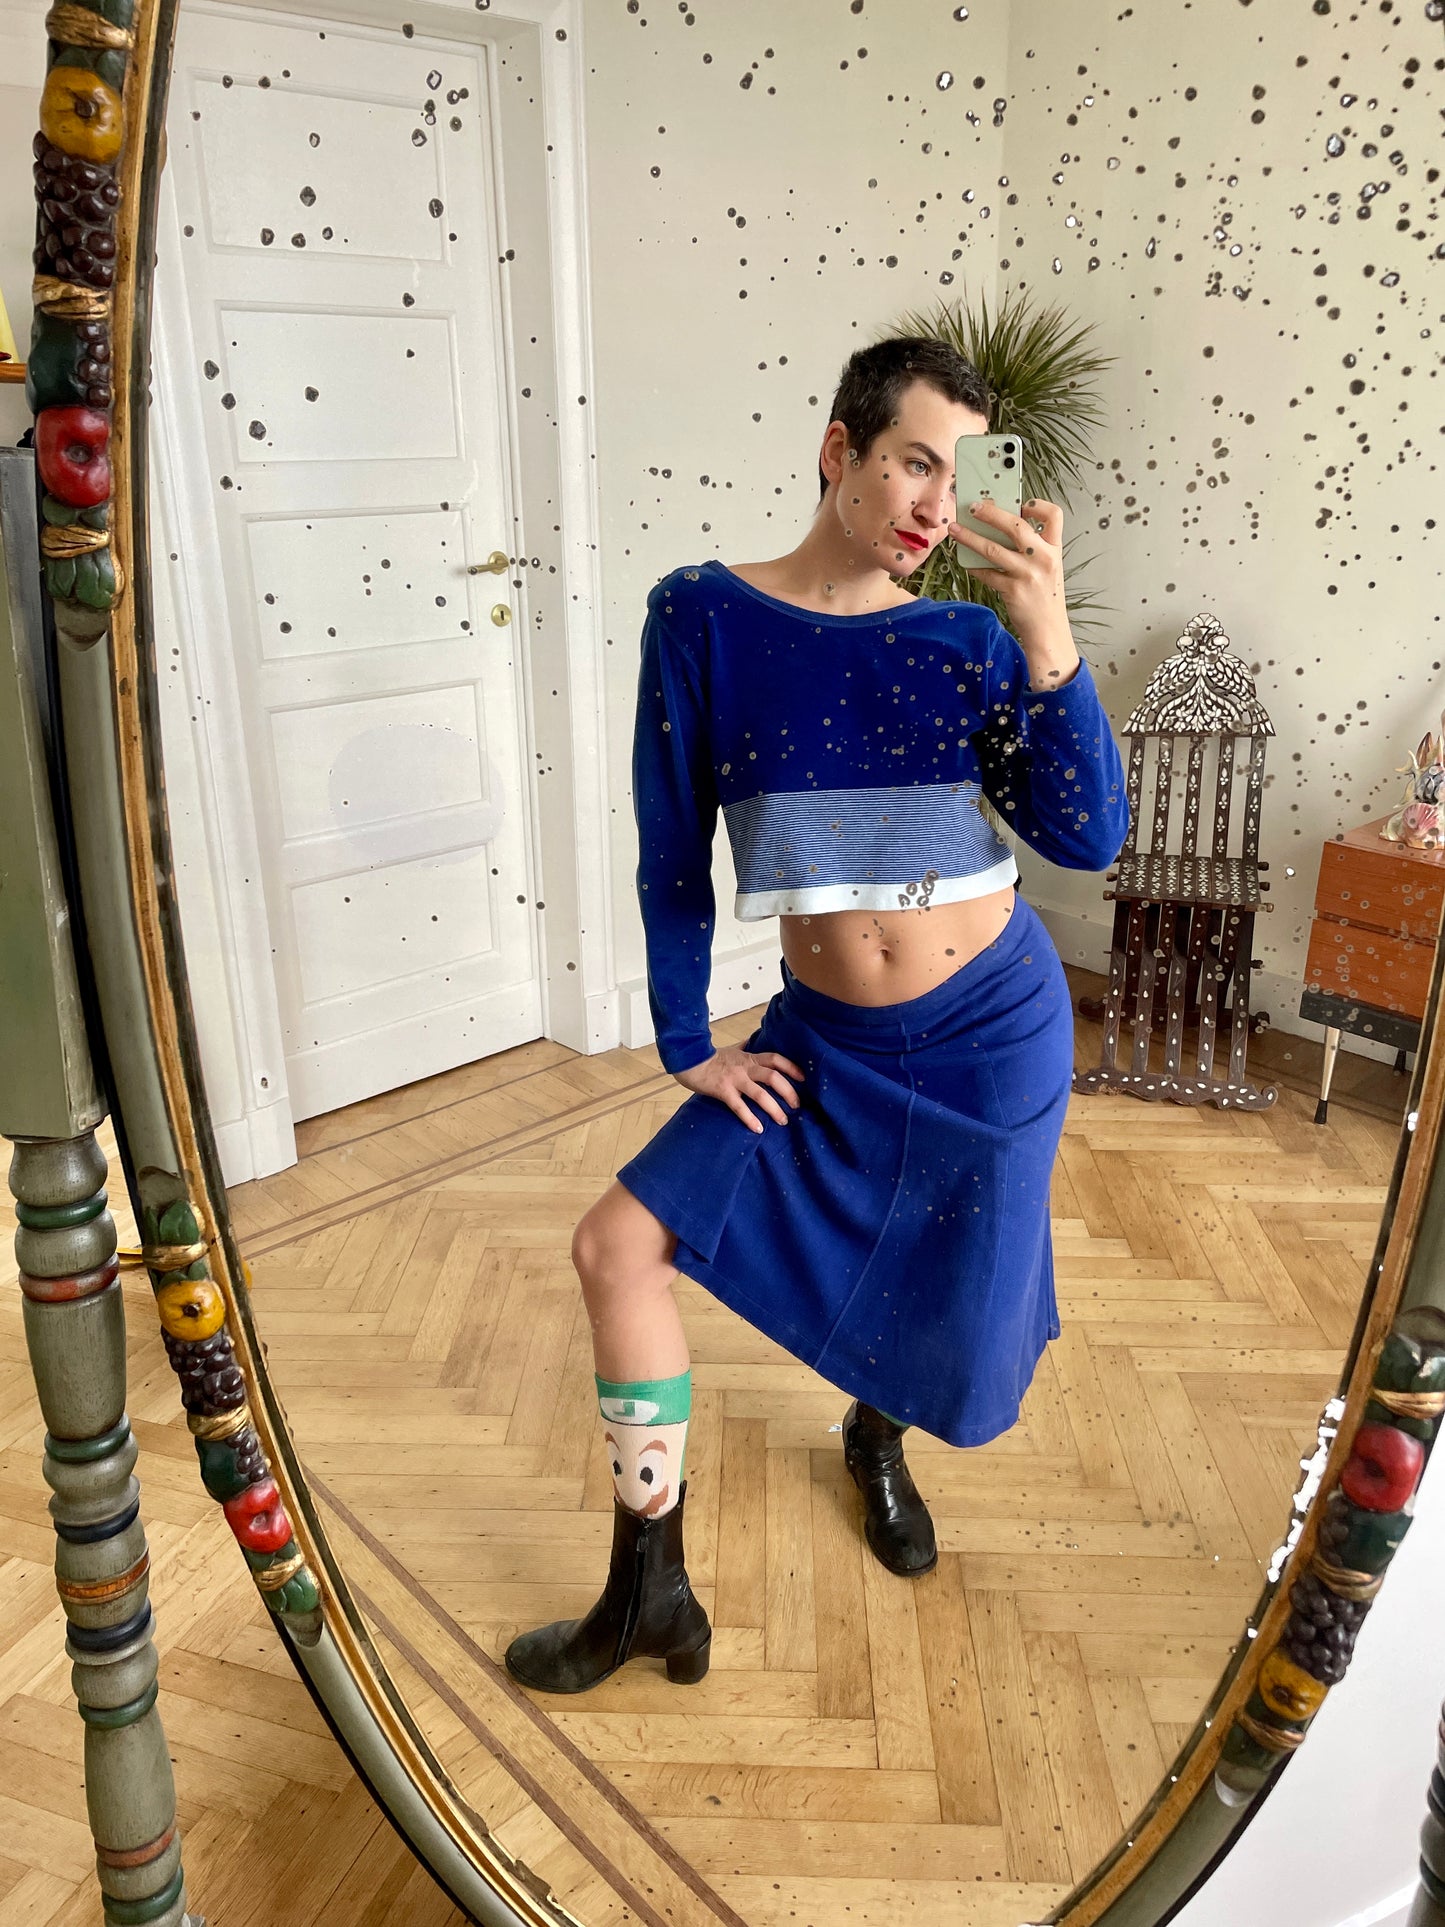 Sonia Rykiel 90's towel fabric blue skirt and sweater set